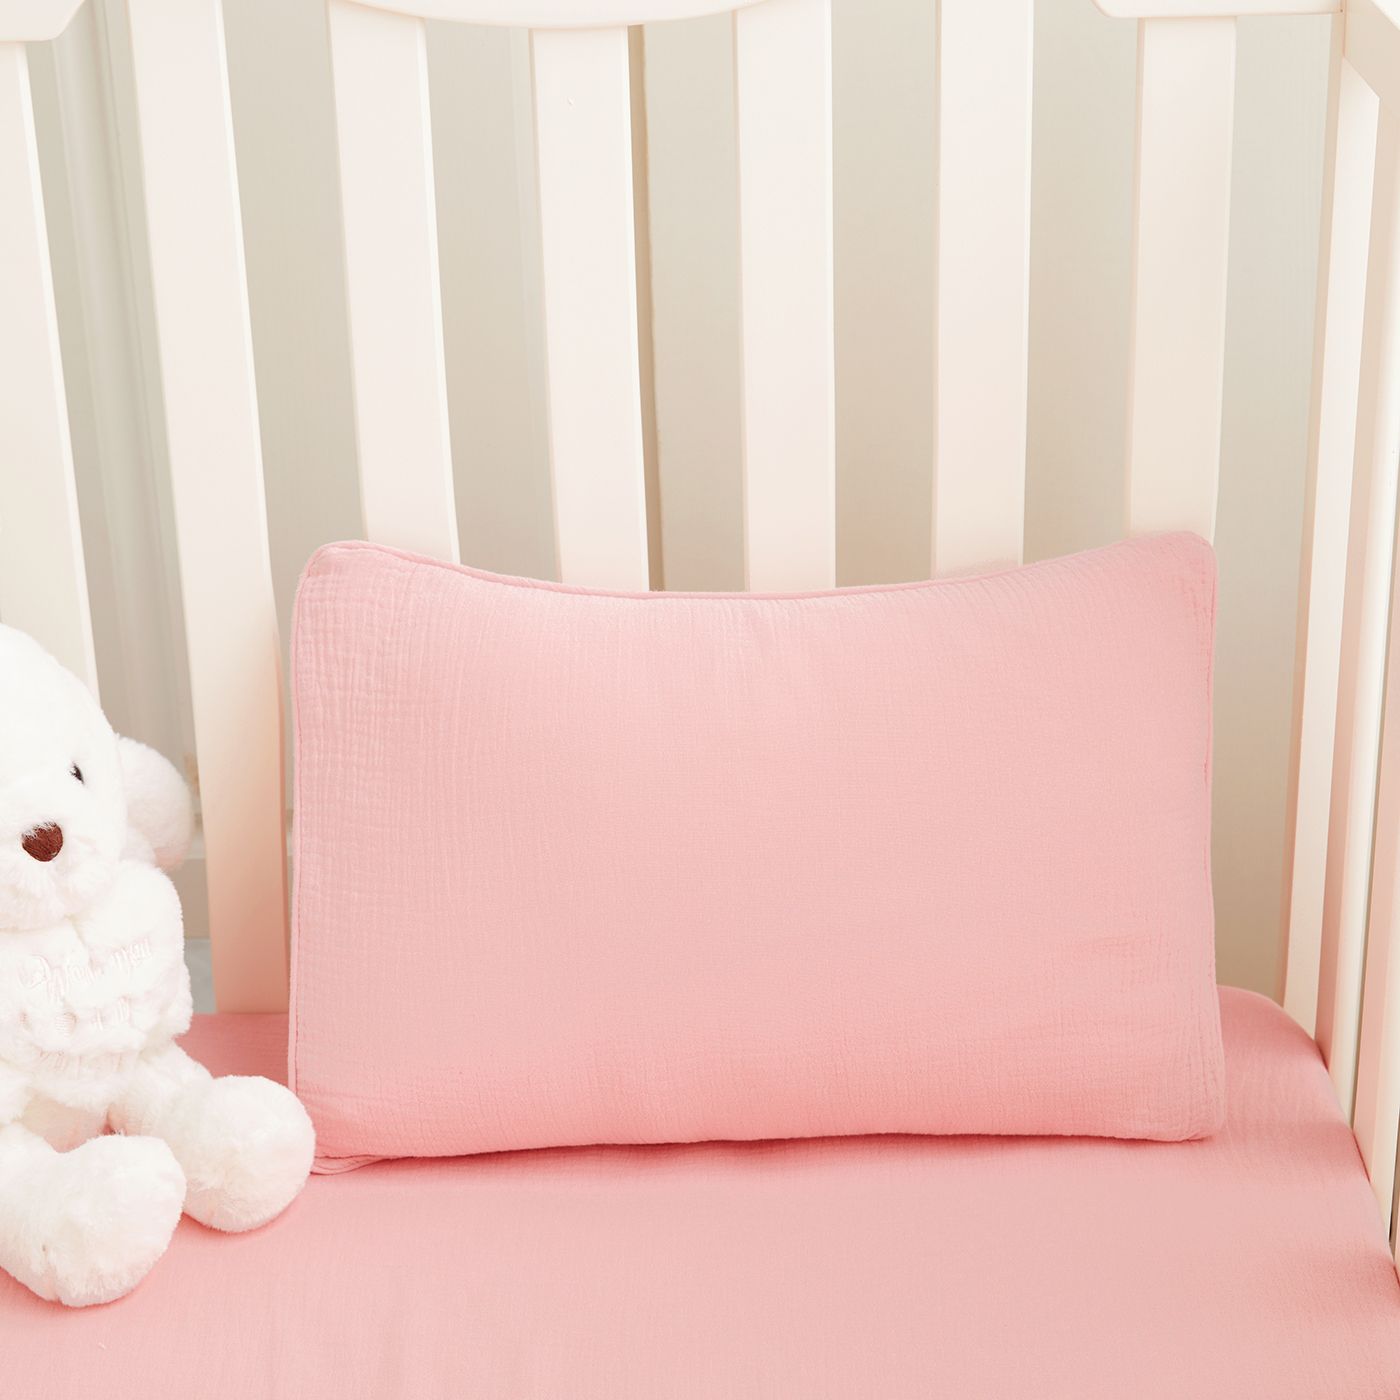 100% Cotton Muslin Baby Gear Includes Bib / Swaddling Blanket / Crib Sheet / Single Layer Quilt / Bu